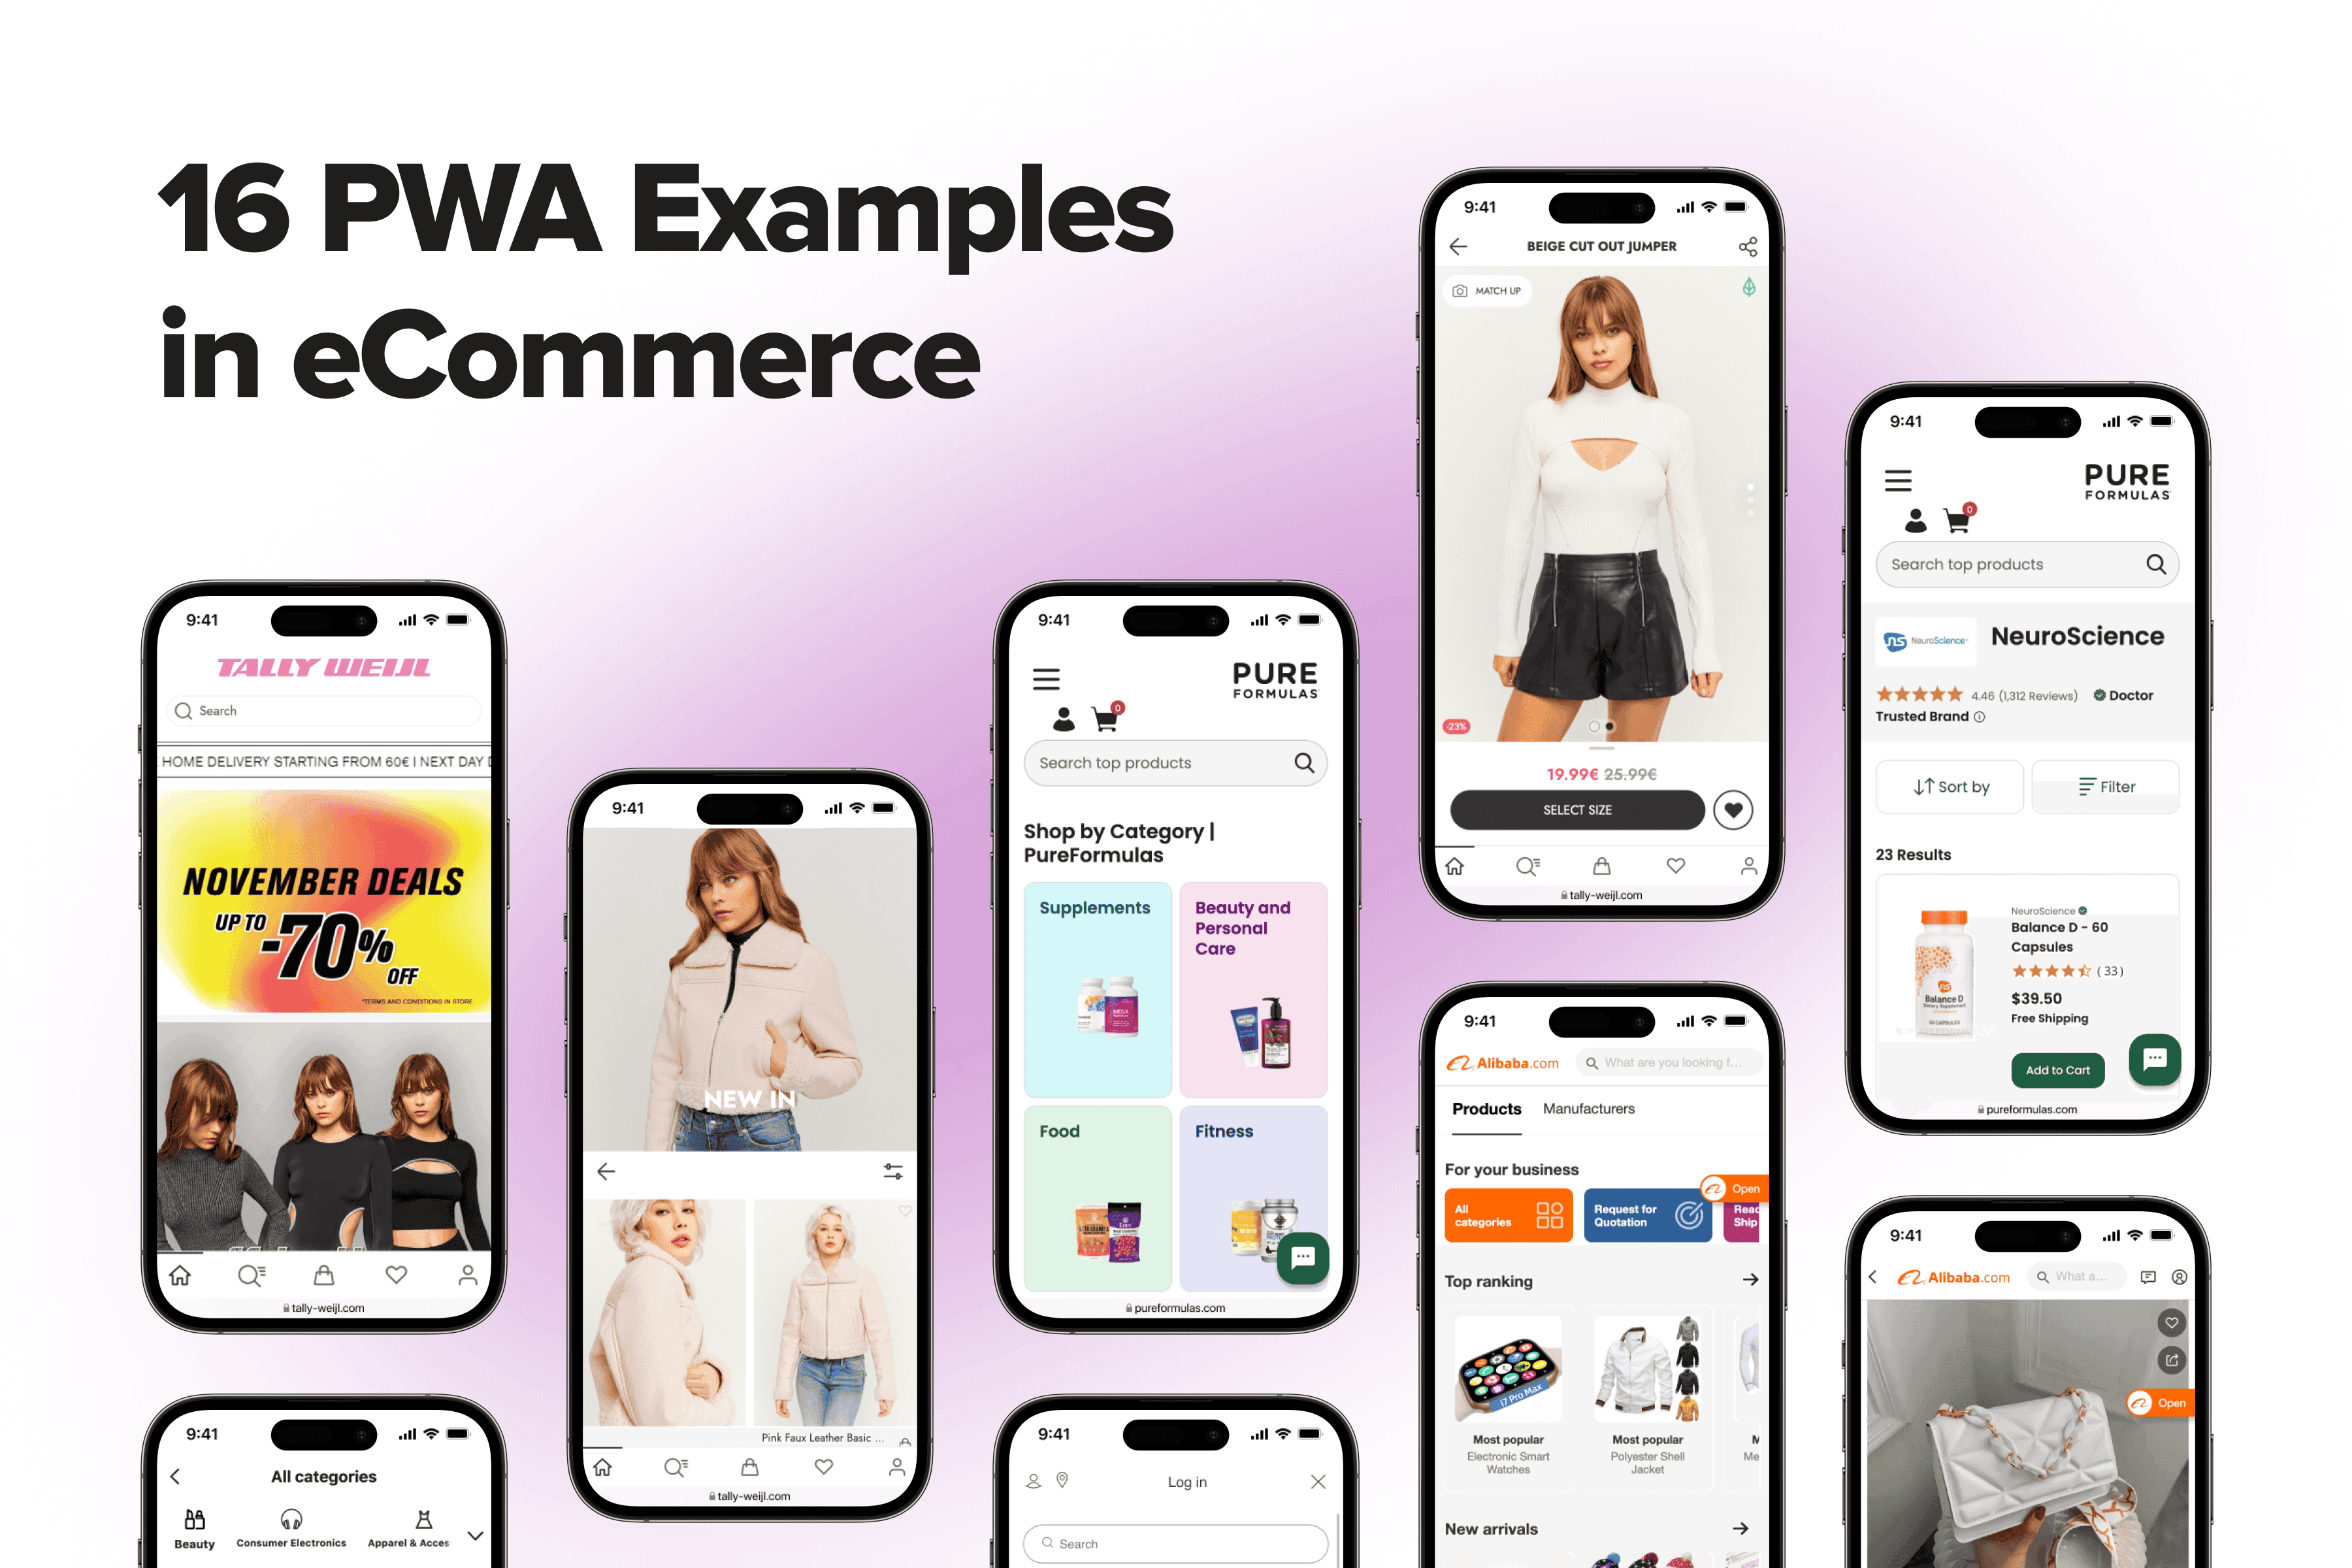 PWA Examples in eCommerce